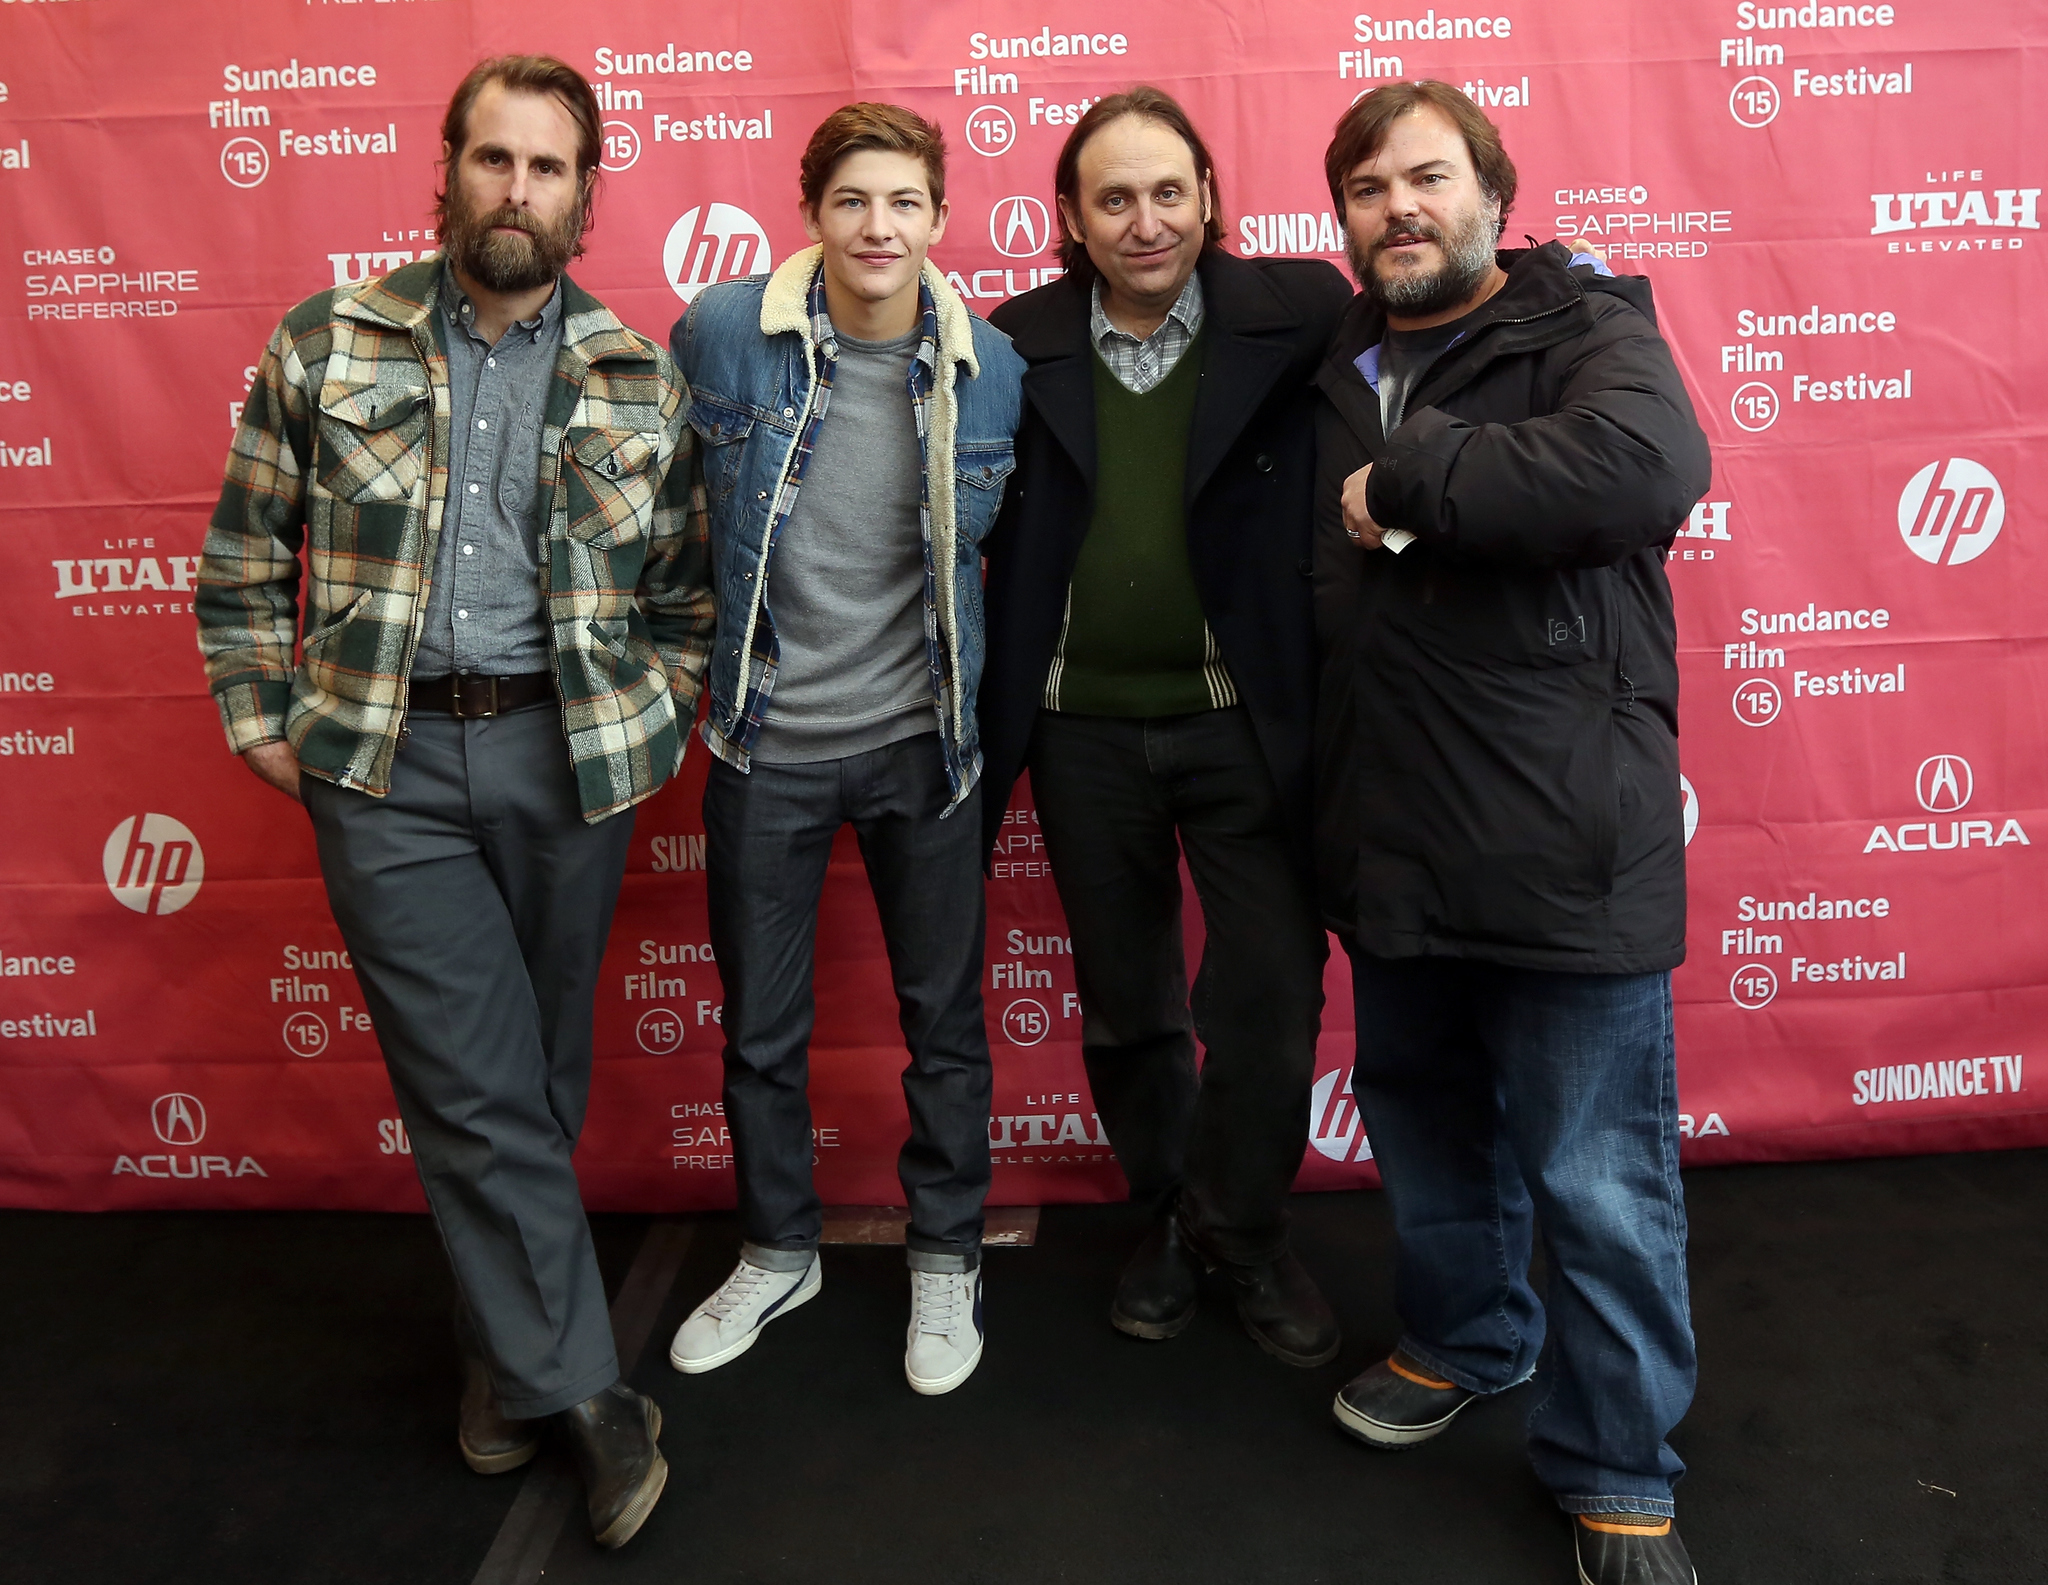 Jack Black, Gregg Turkington, Rick Alverson and Tye Sheridan at event of Entertainment (2015)